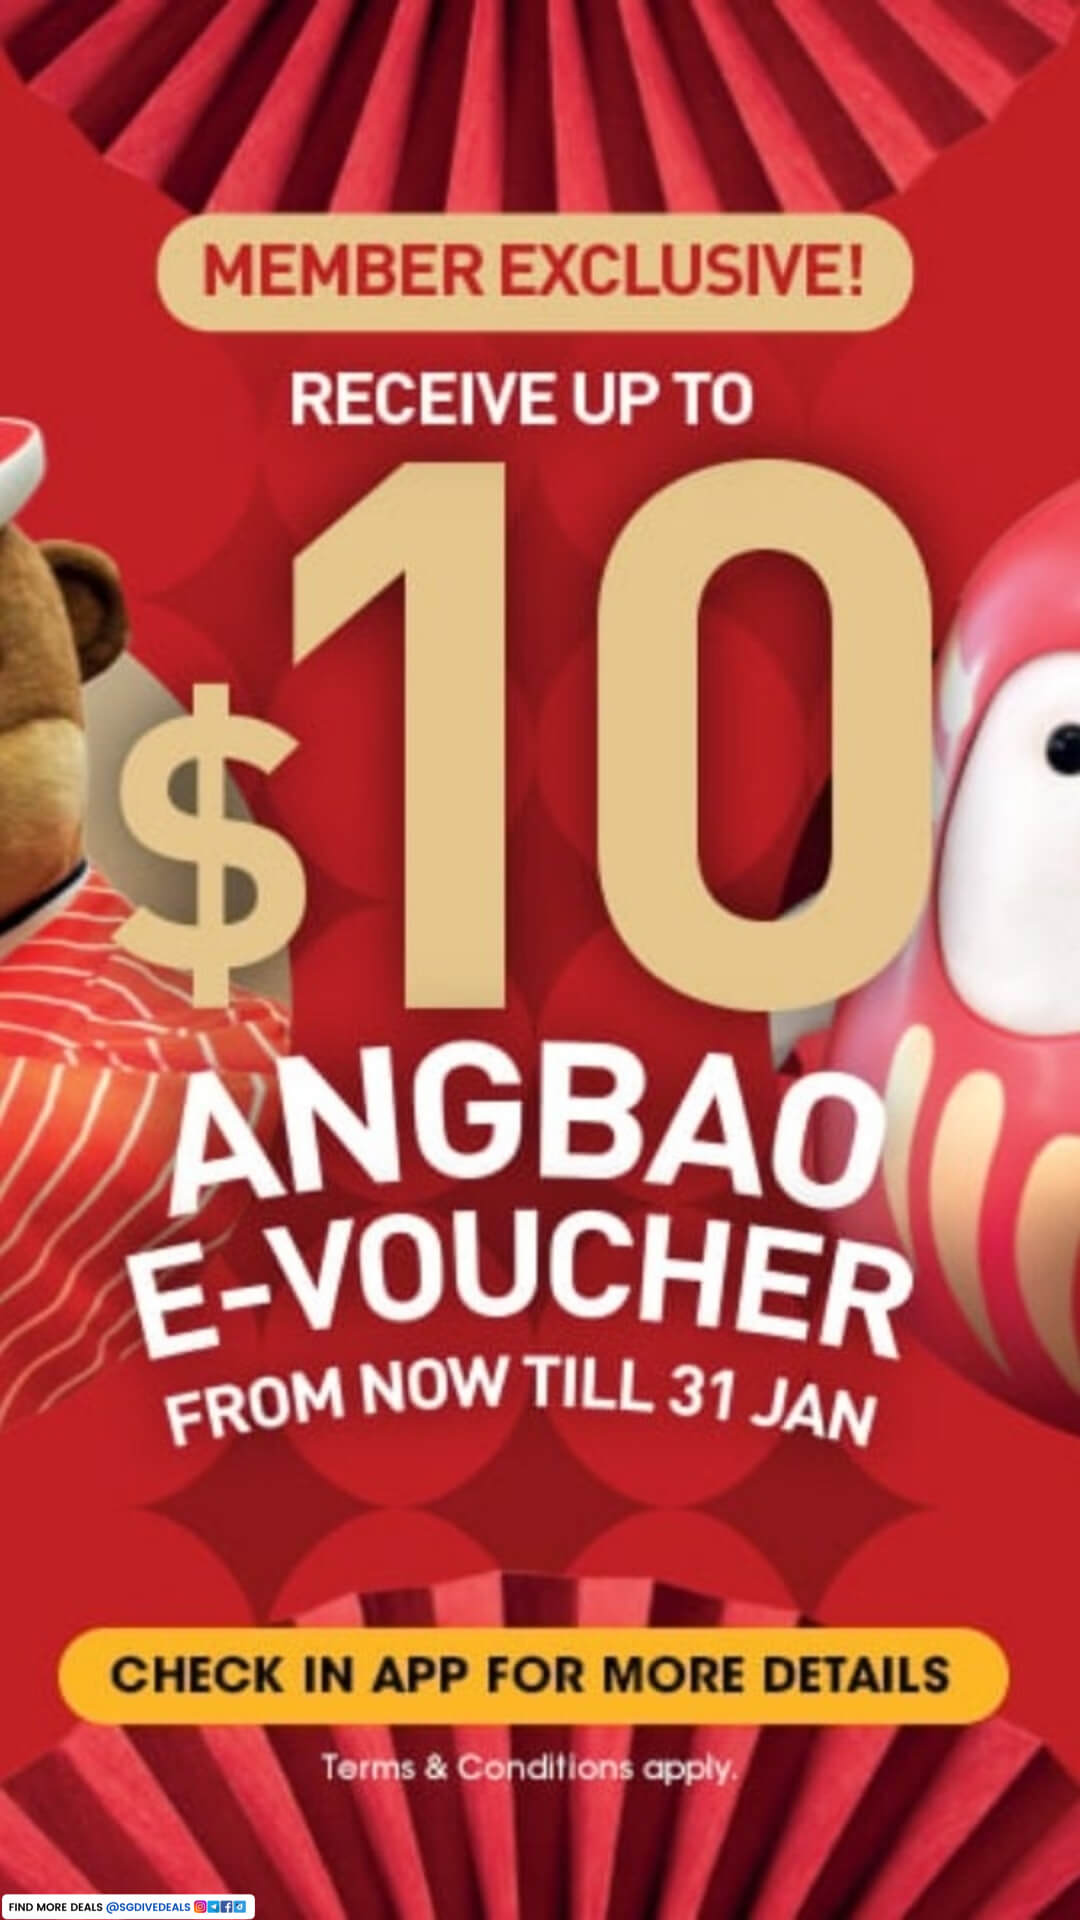 Genki Sushi,Receive up to $10 Angbao e- voucher